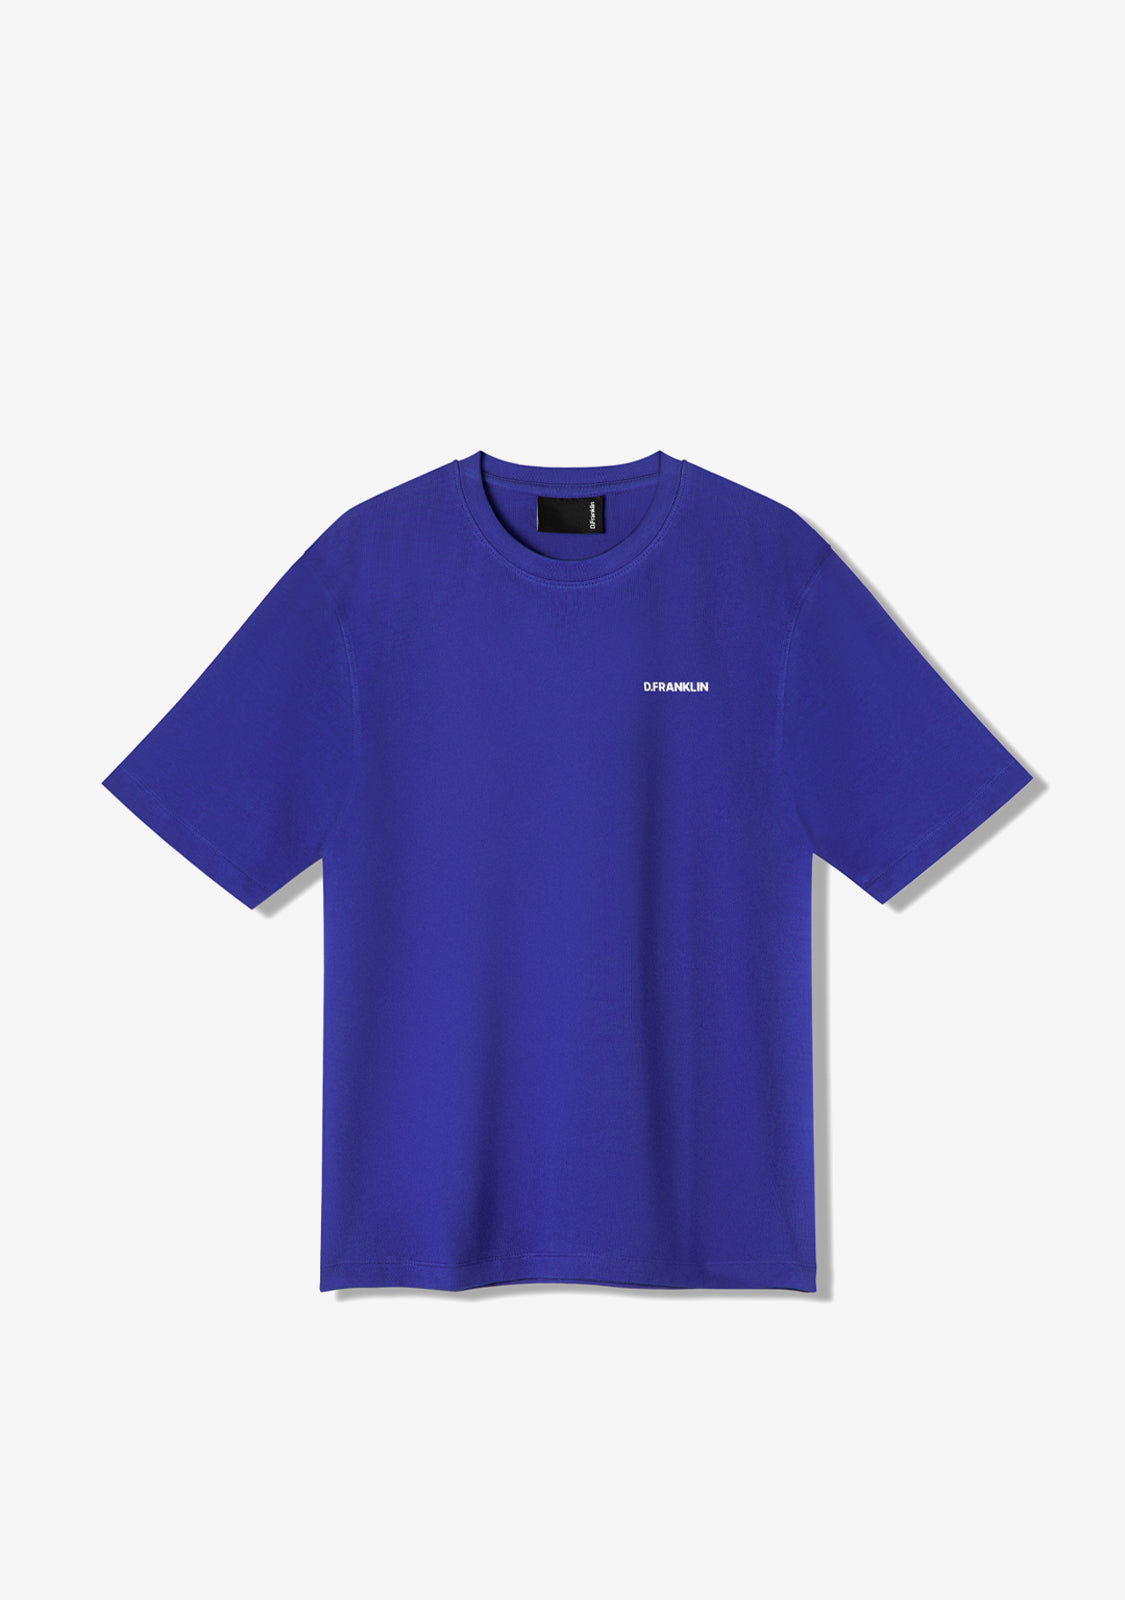 Sunsets T-Shirt Blue / White